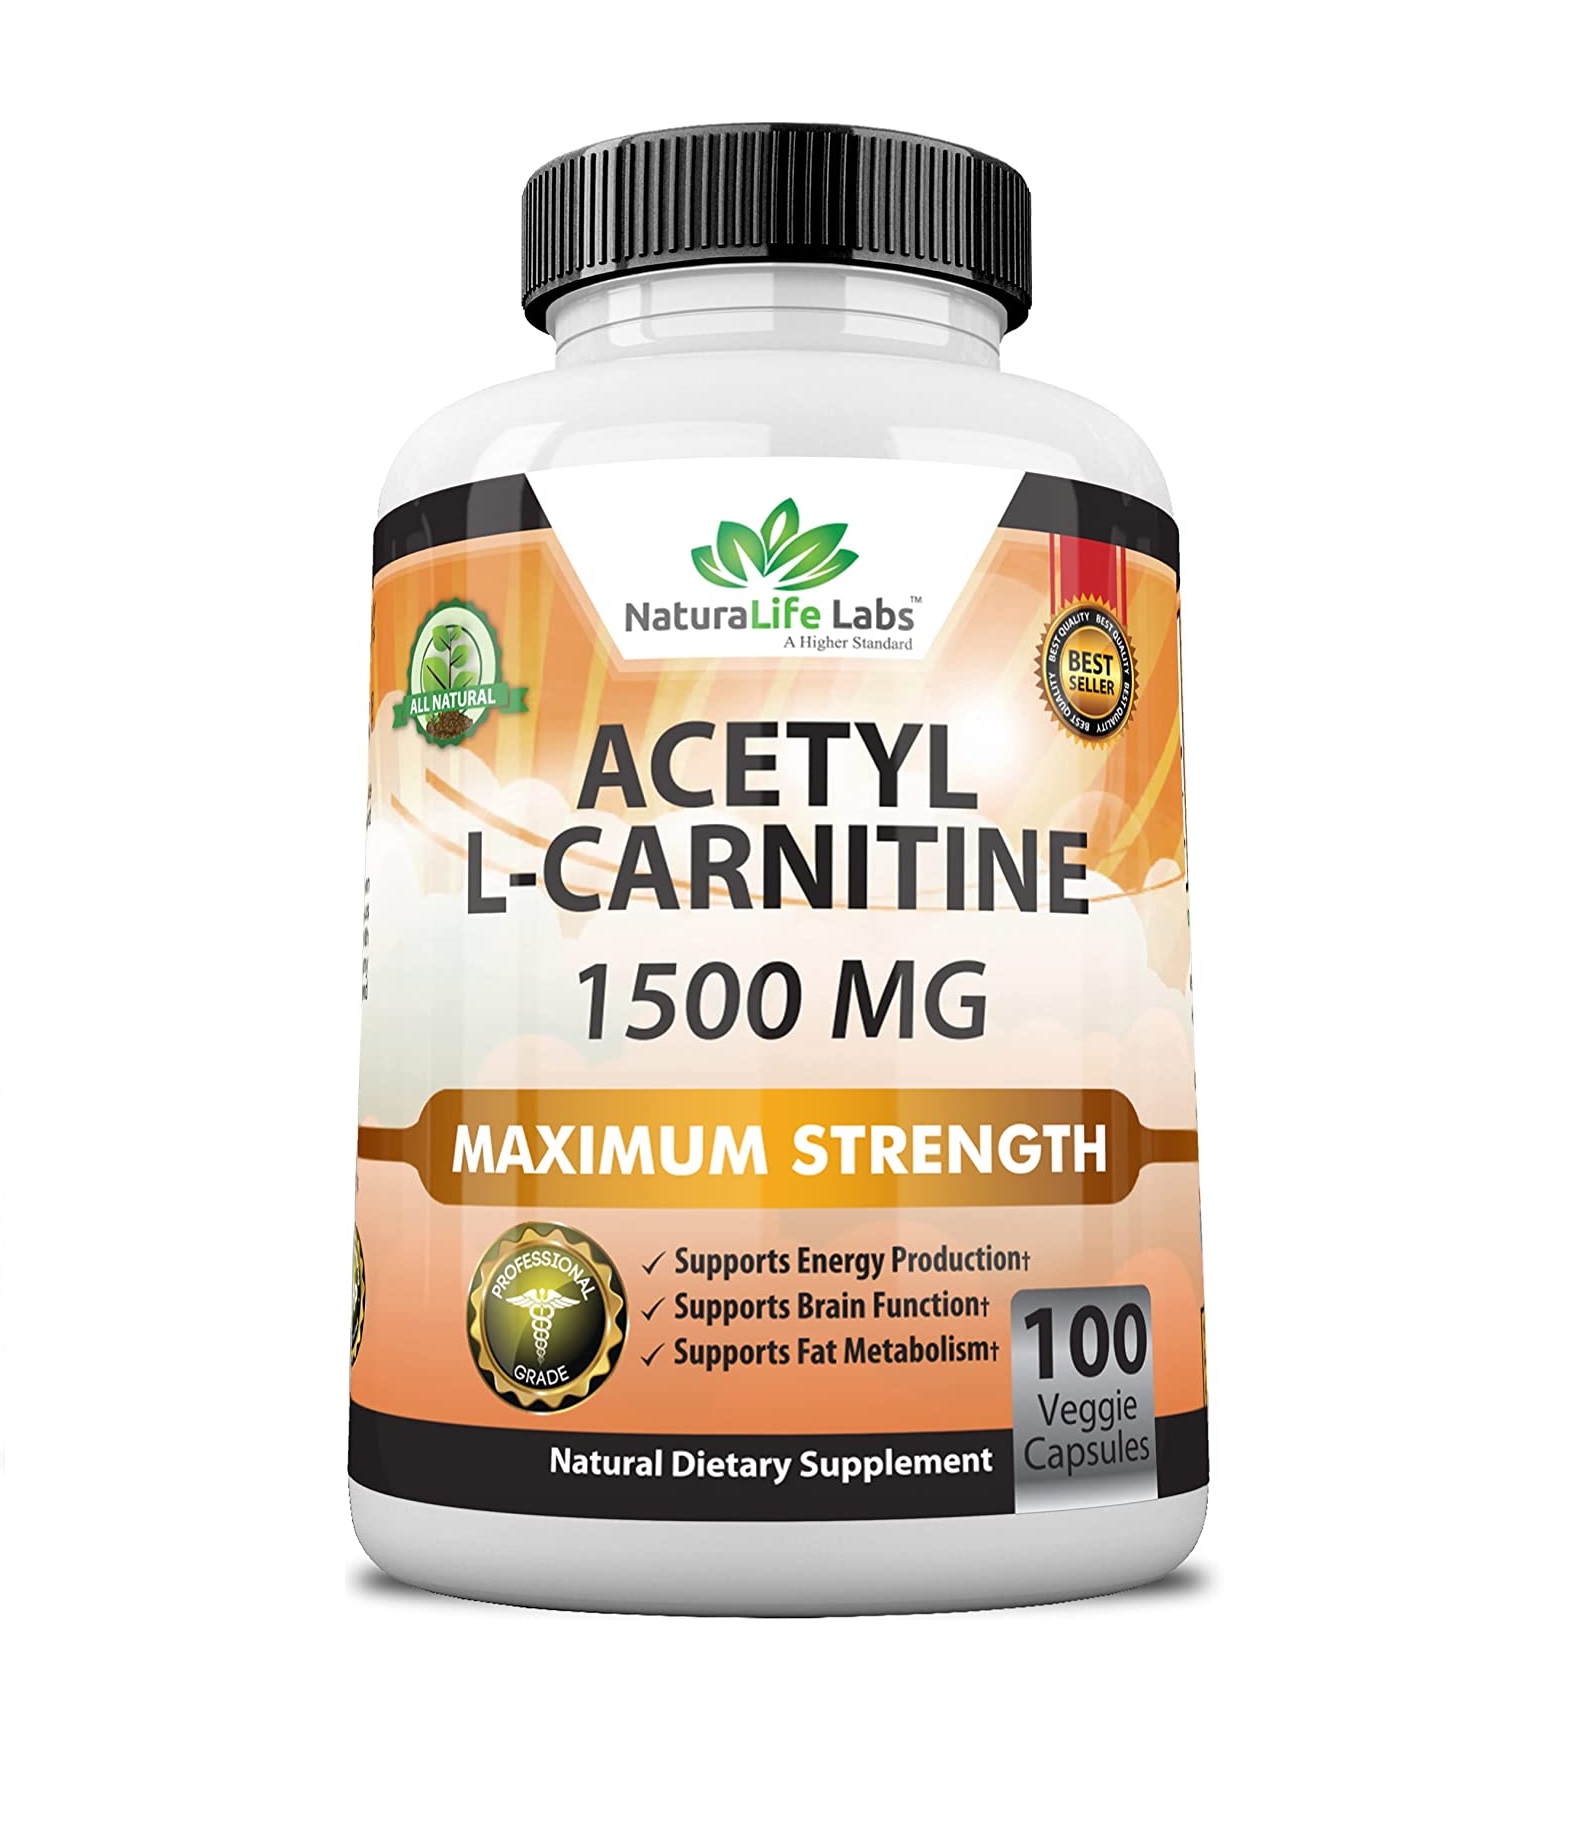 NaturaLife Labs Acetyl L-Carnitine 1500mg Maximum Strength